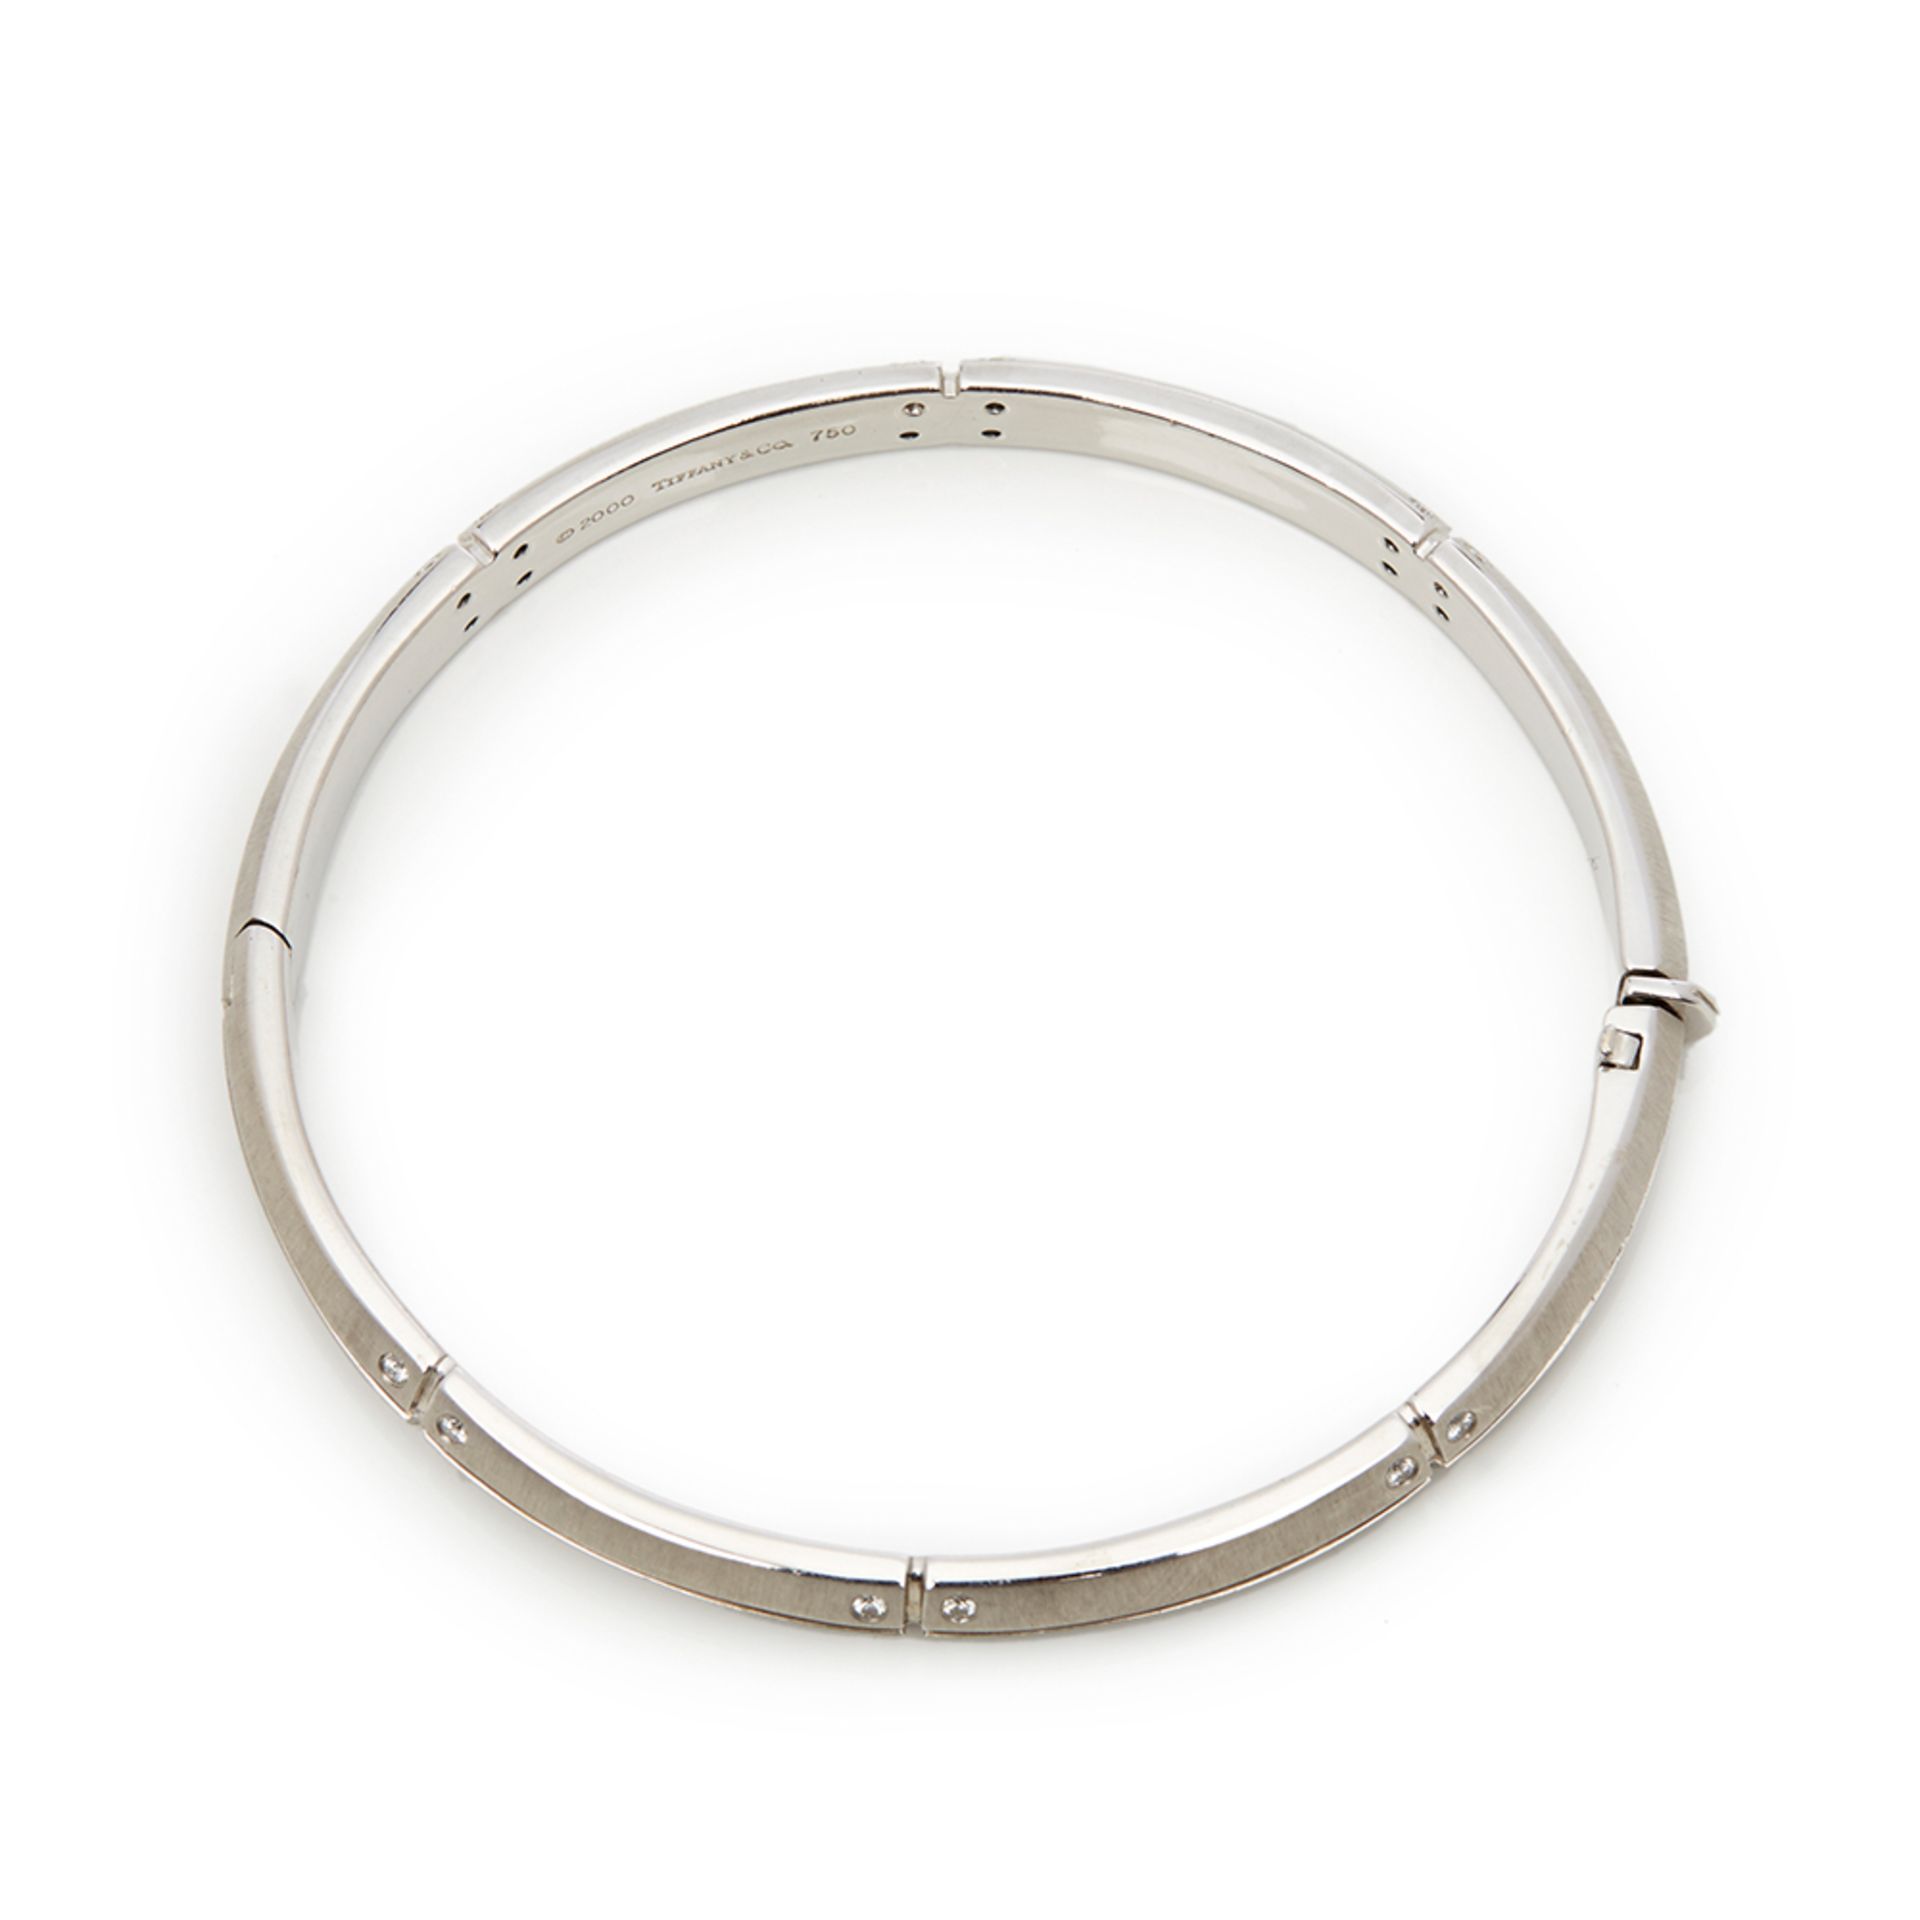 Tiffany & Co. 18k White Gold Diamond Streamerica Bracelet - Image 8 of 8